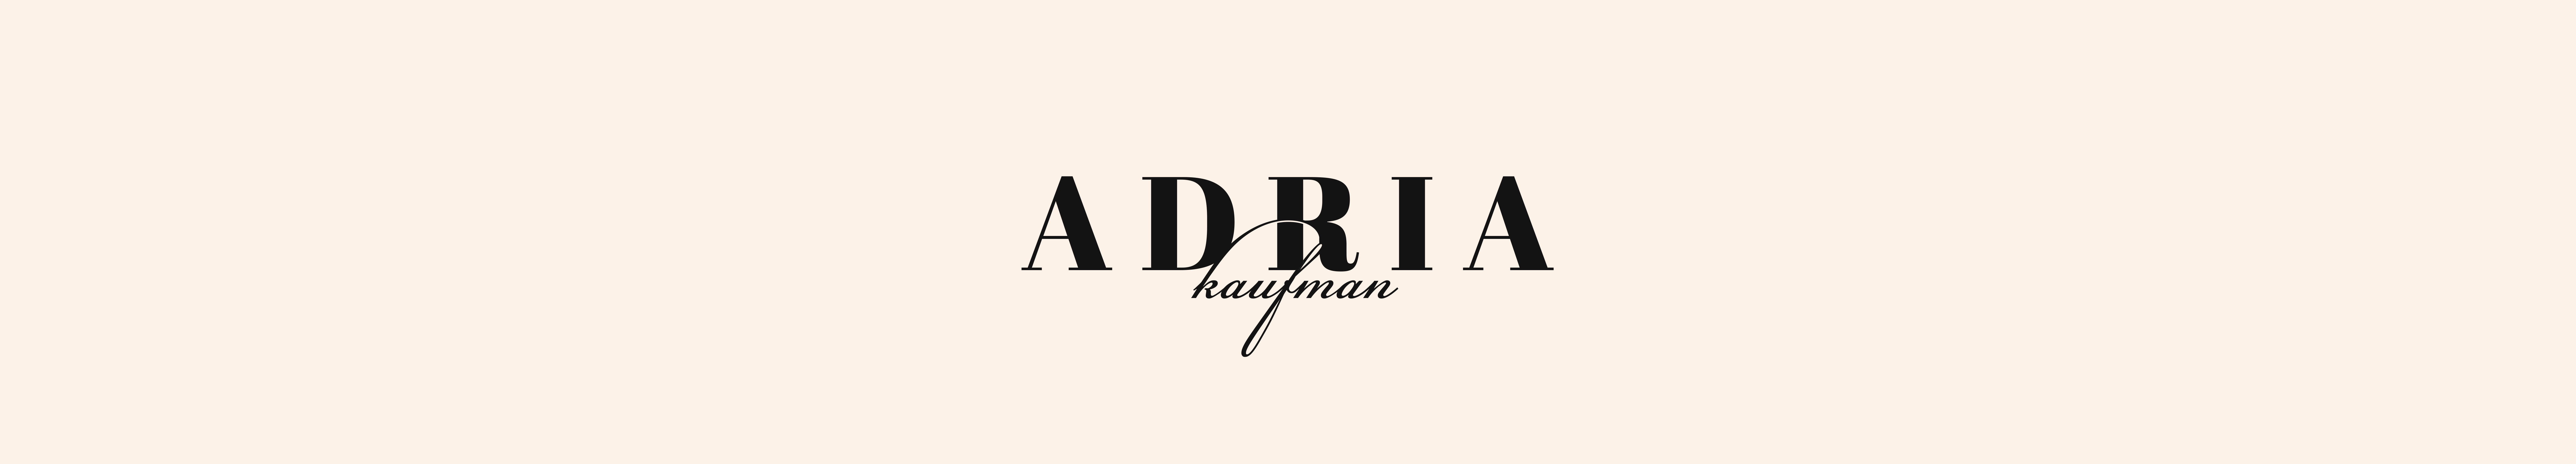 Adria Kaufman profil başlığı